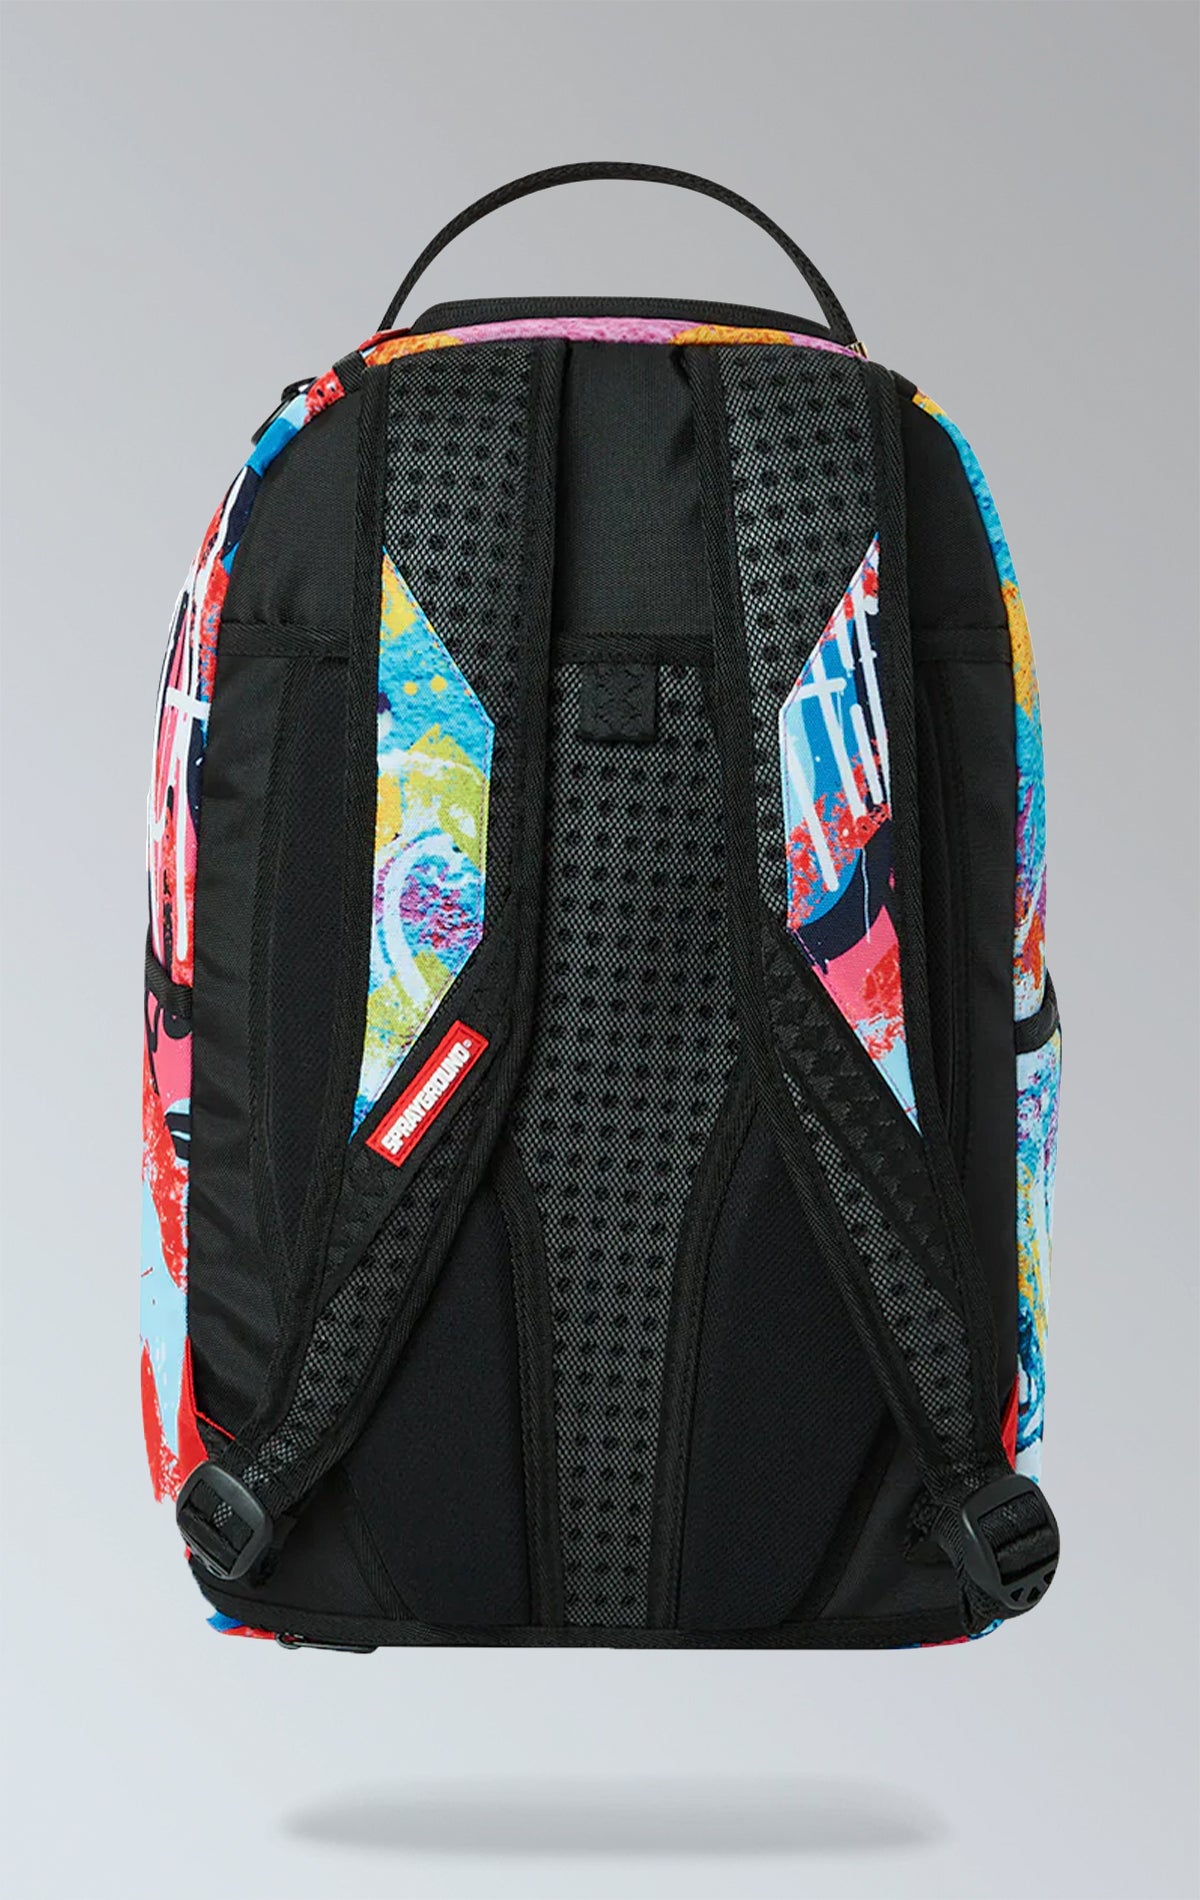 Sprayground Lone Shark Backpack's ergonomic mesh back padding and adjustable straps.